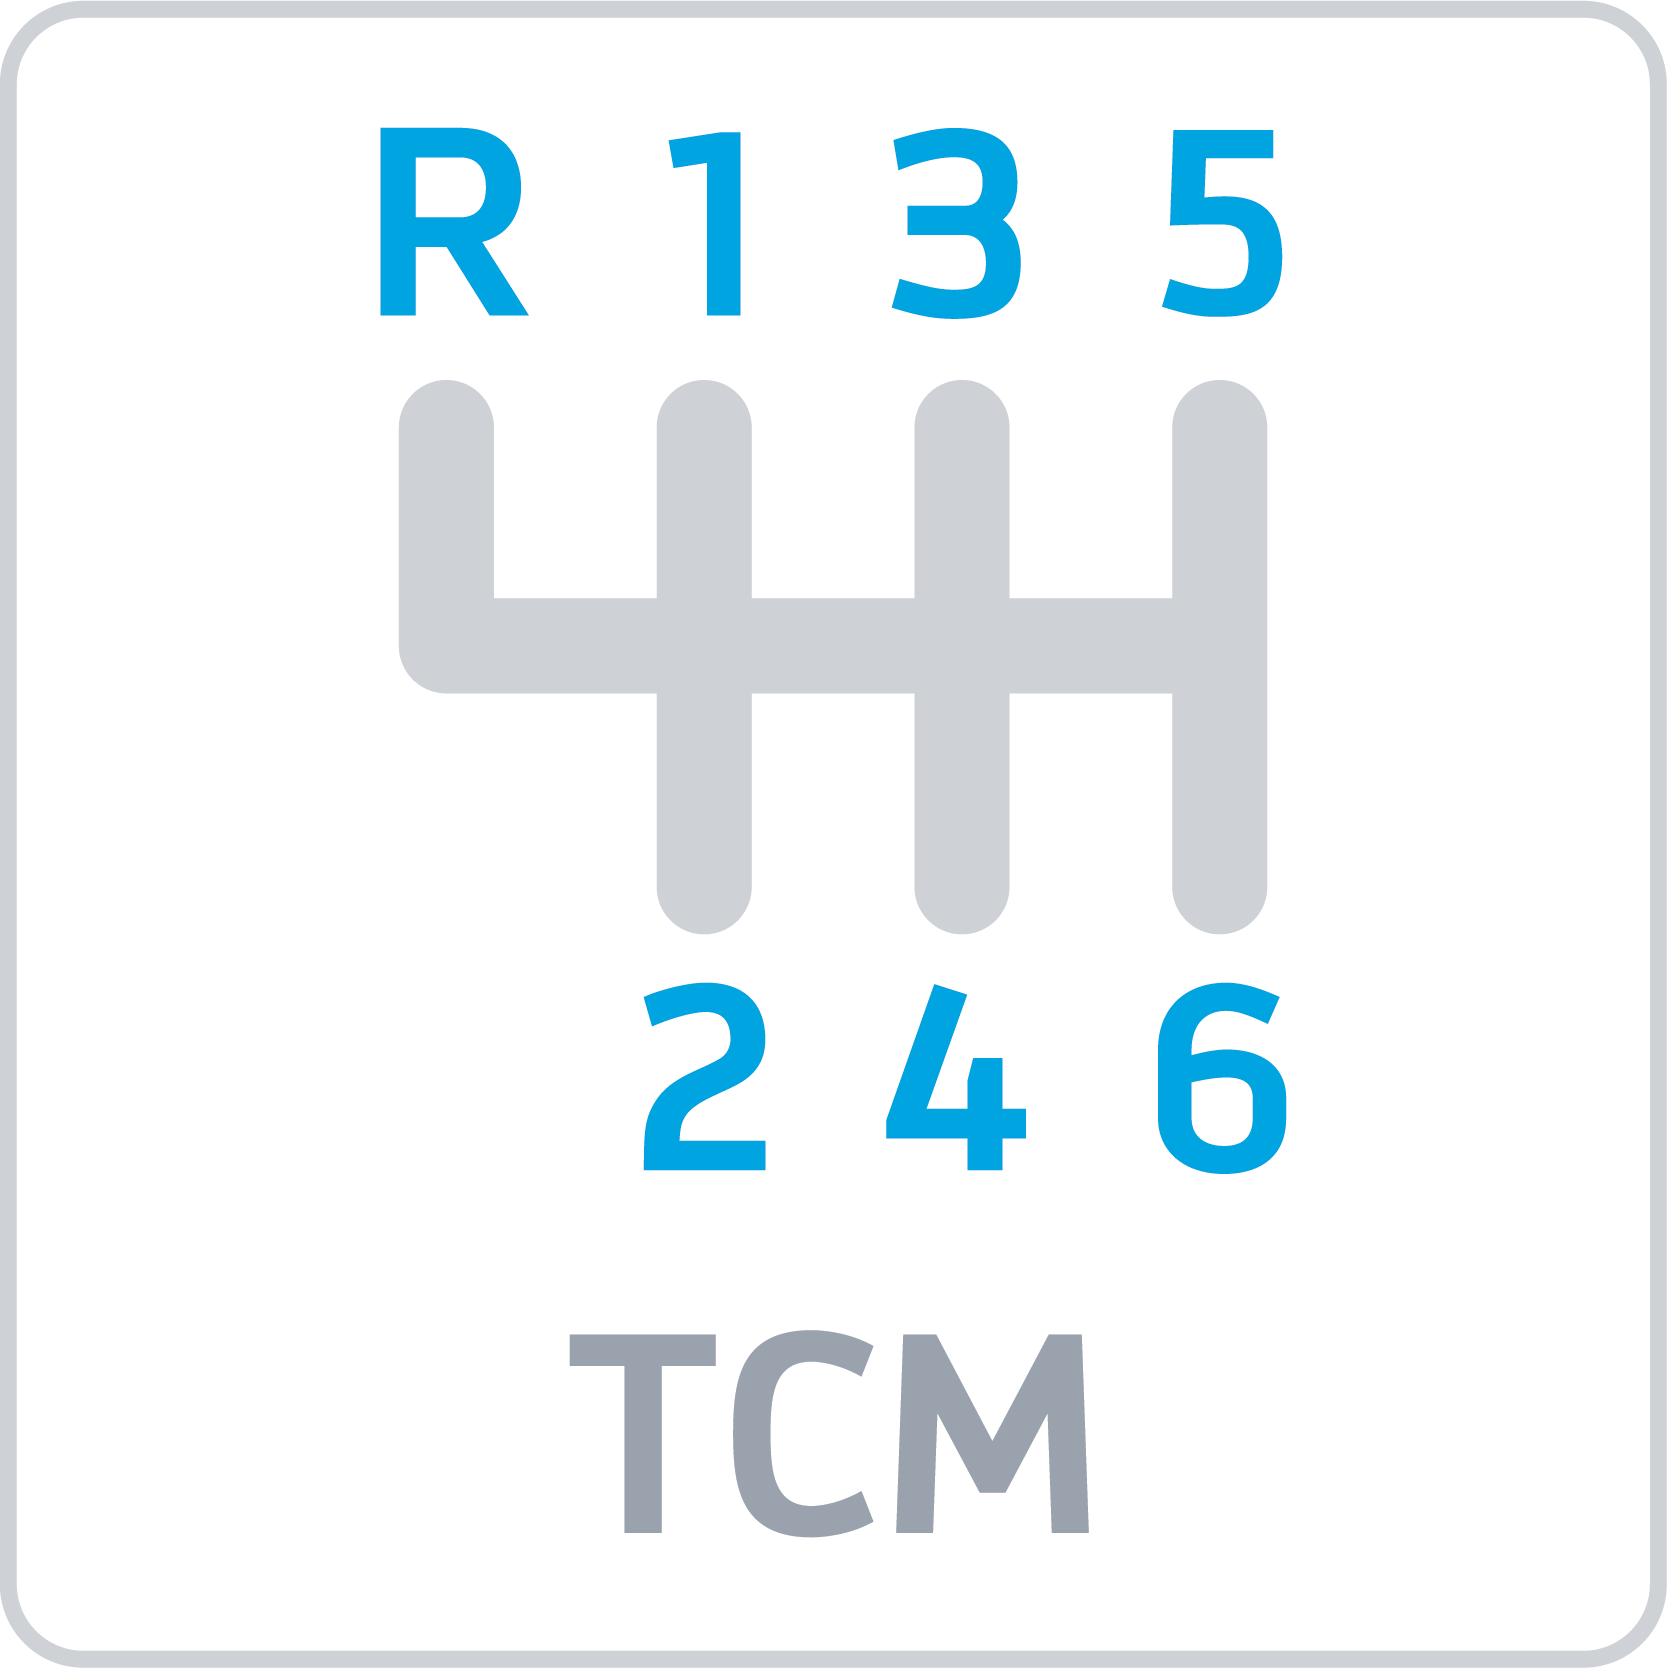 Ford Transmission Control Module (TCM)